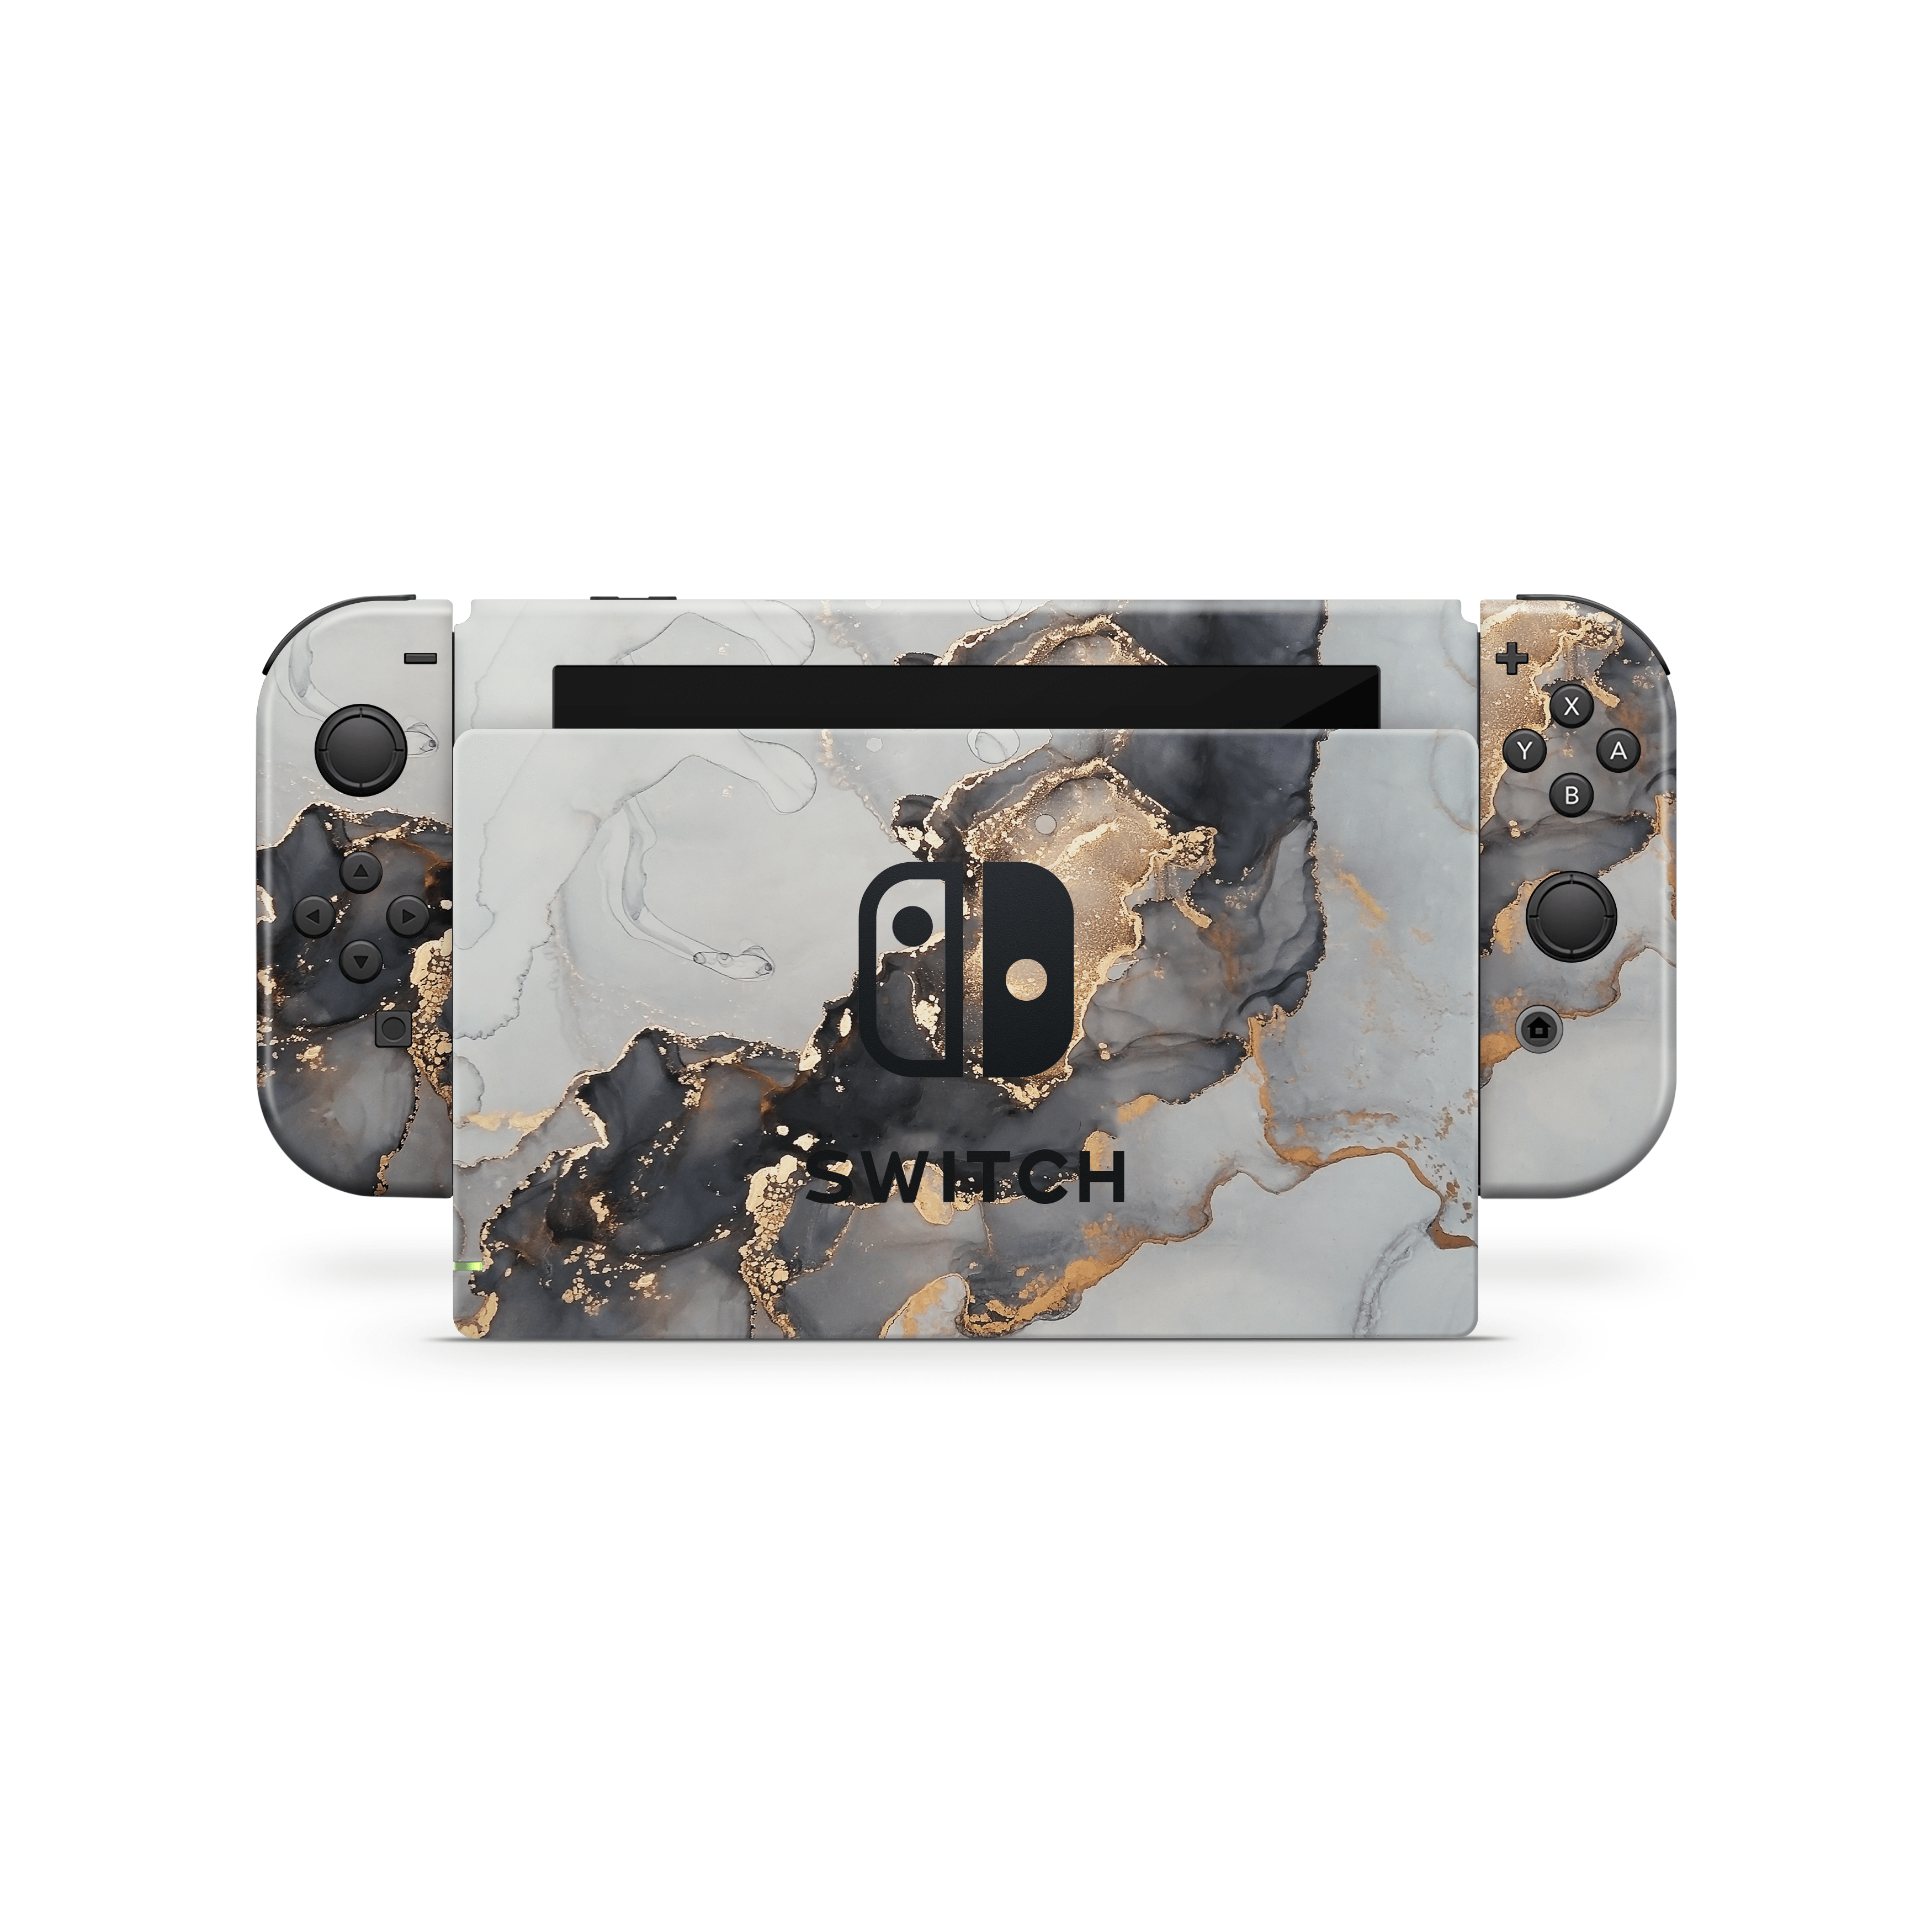 Black Marble Nintendo Switch Skin